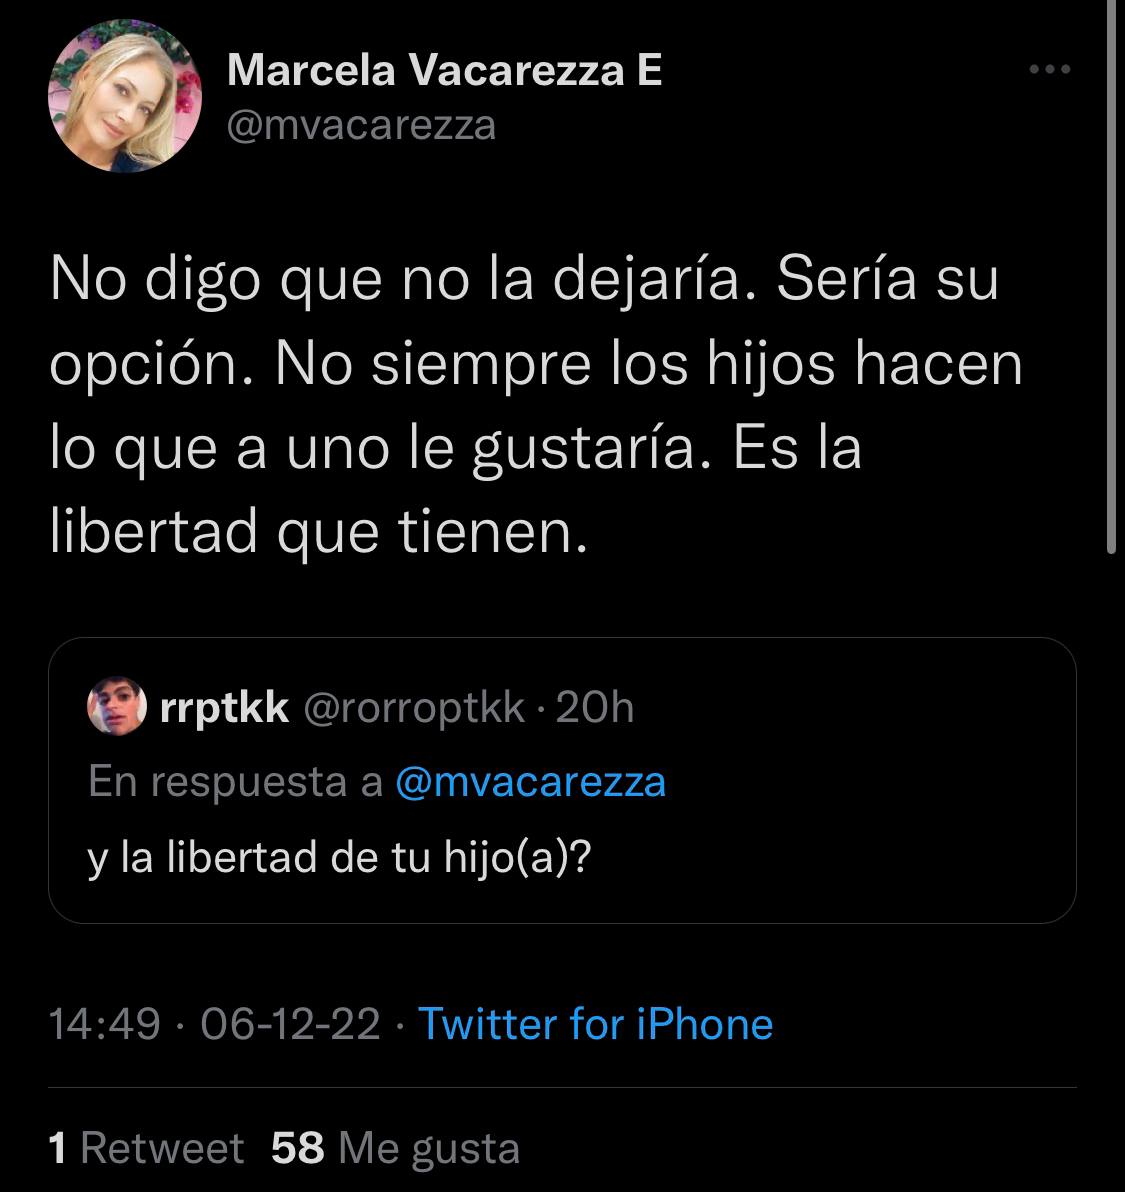 Twitter @mvacarezza